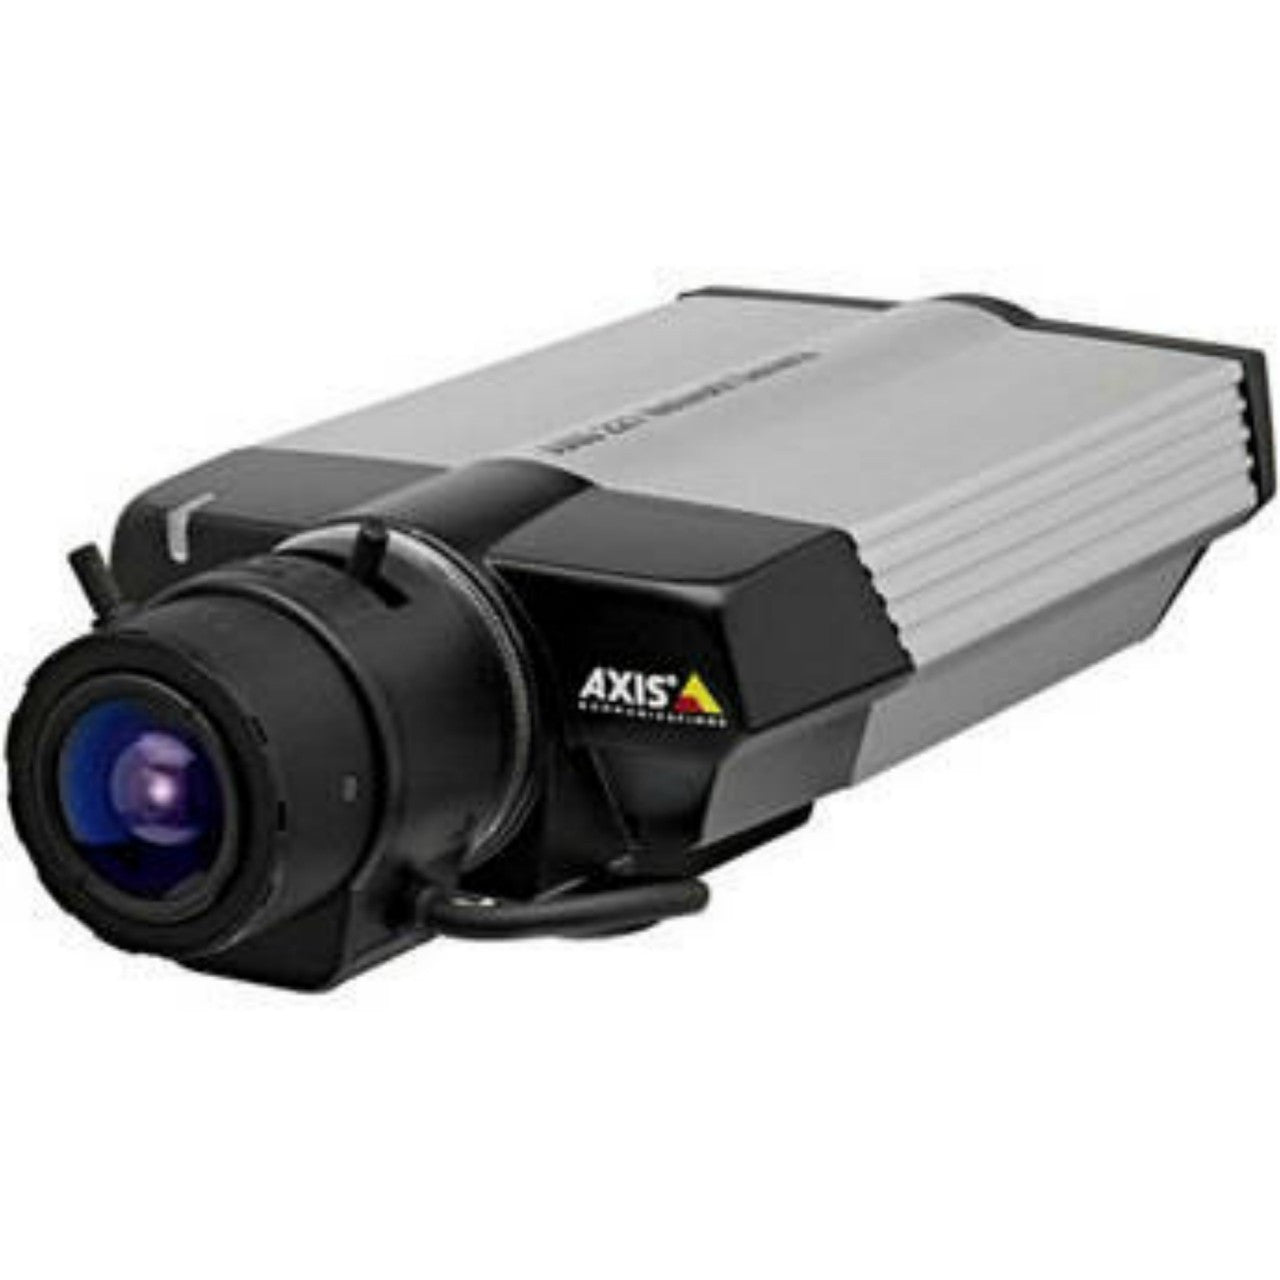 AXIS 221 (0221-004) IP Network Camera